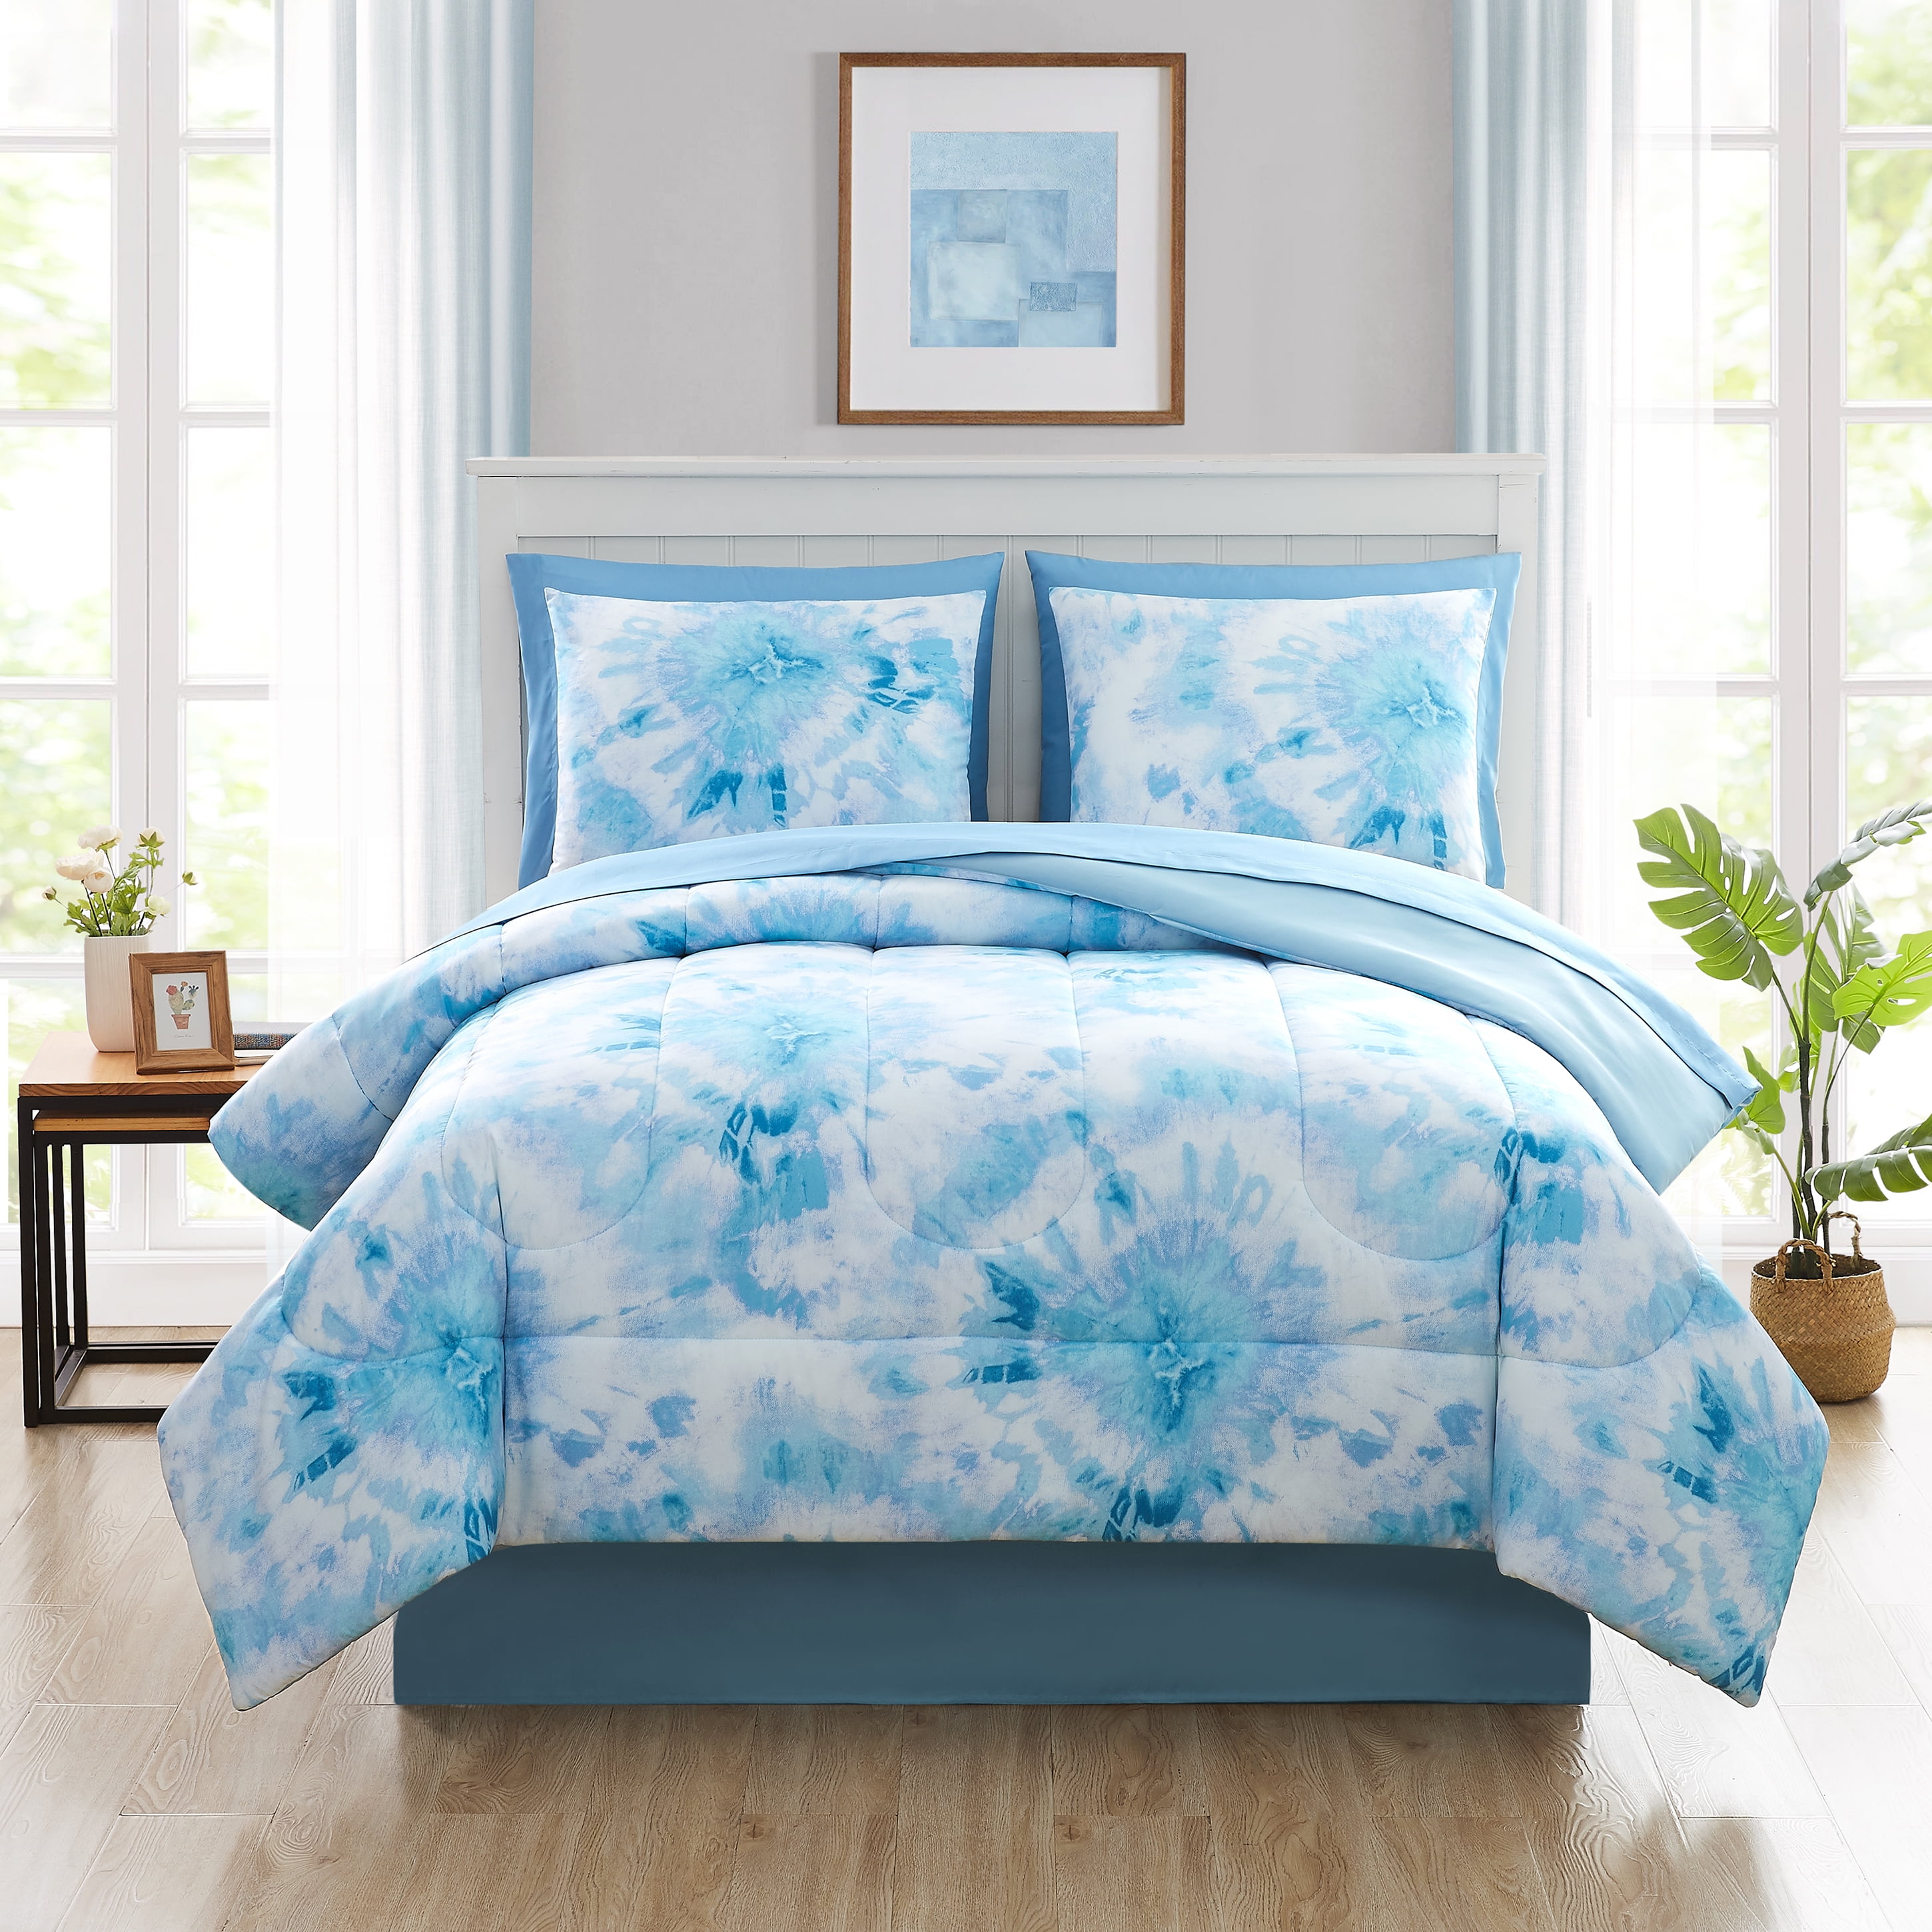 9 Piece Comforter Set Bed Sheet Bed Skirt Bed In A Bag Teen Girl Bedroom Bedding 